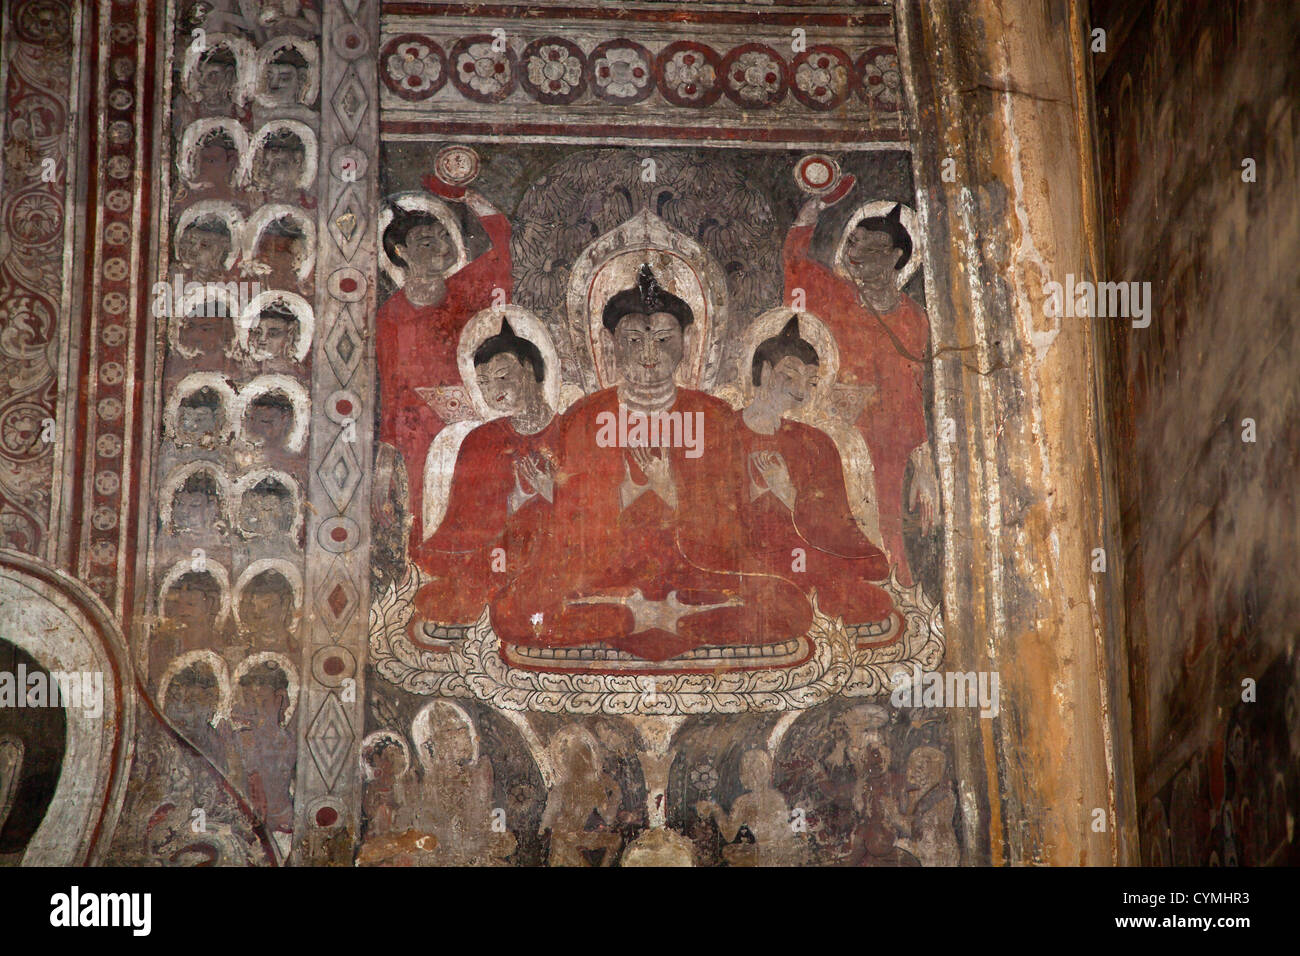 The LAW KAHTIKEPAN temple complex boast some beautiful ancient FRESCOS - BAGAN, MYANMAR Stock Photo